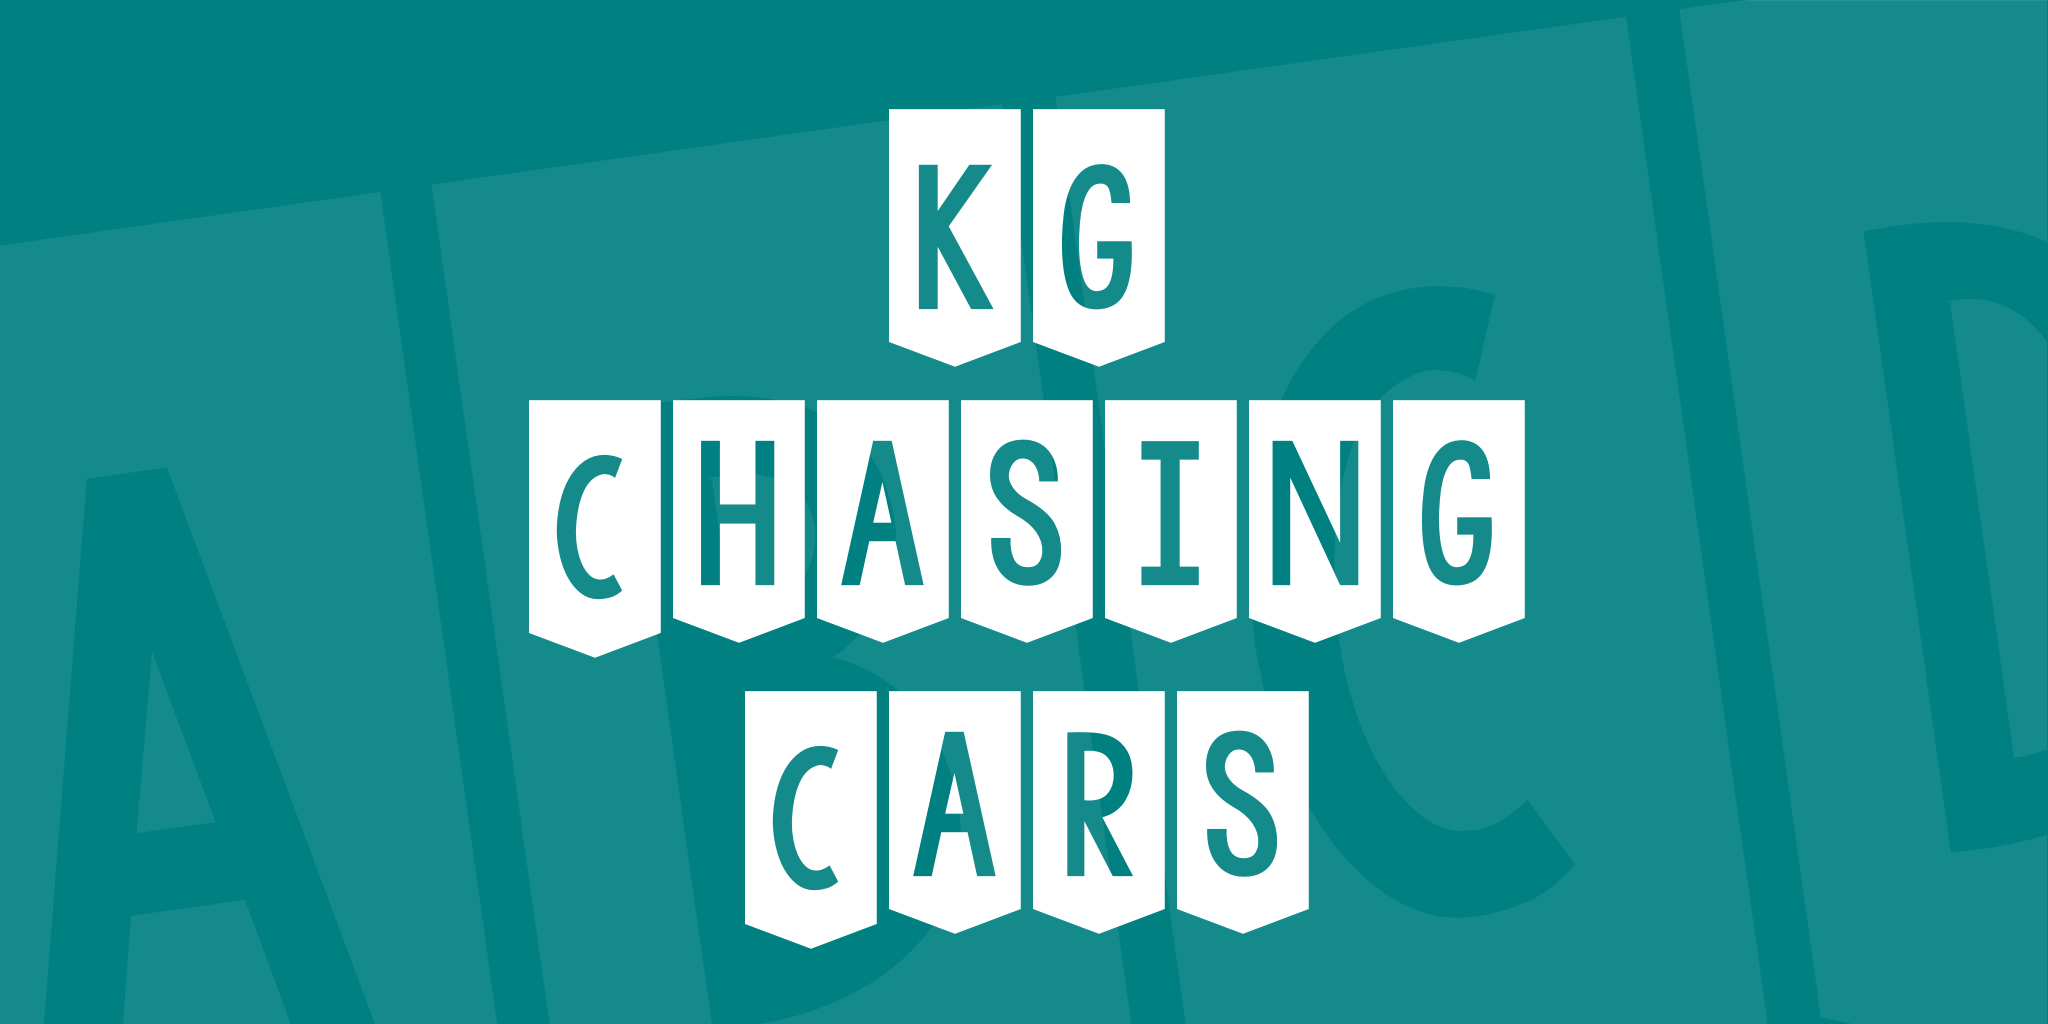 Kg Chasing Cars